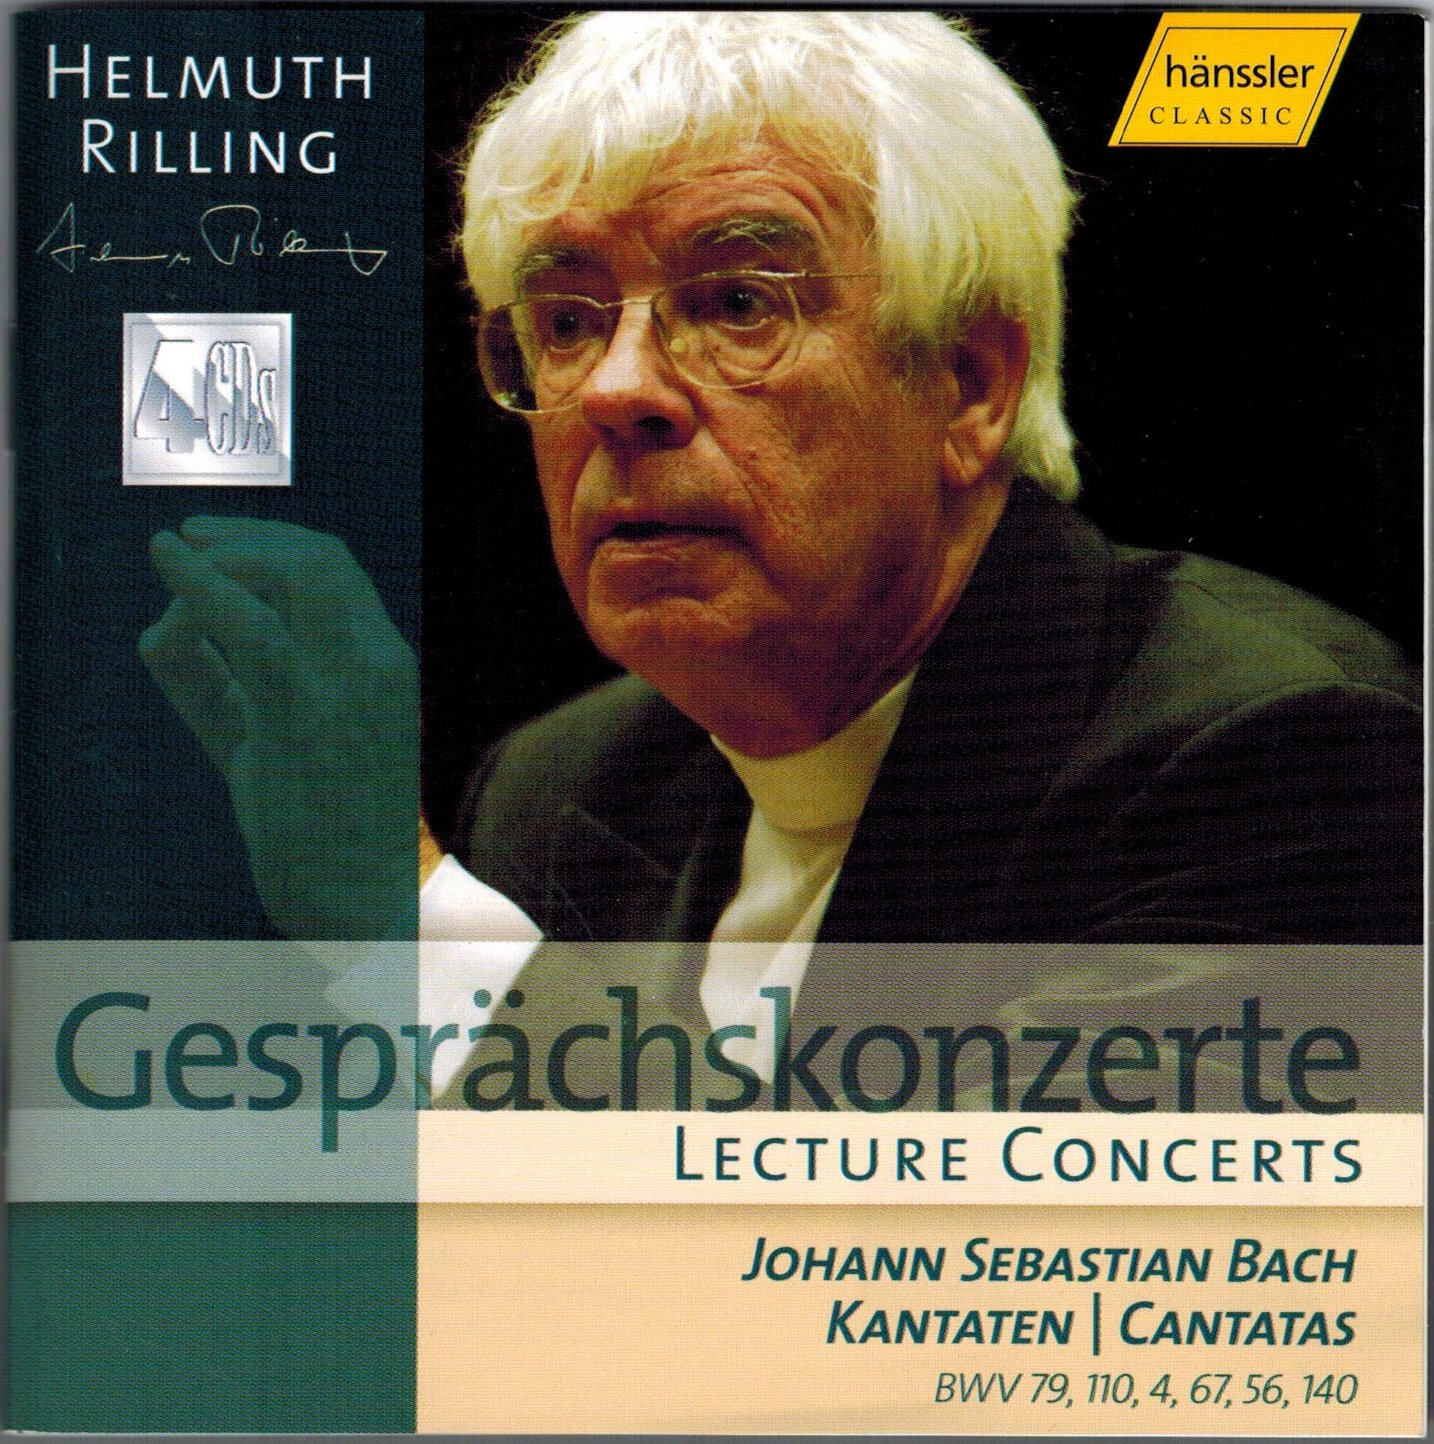 JOHANN SEBASTIAN BACH, Lecture Concerts